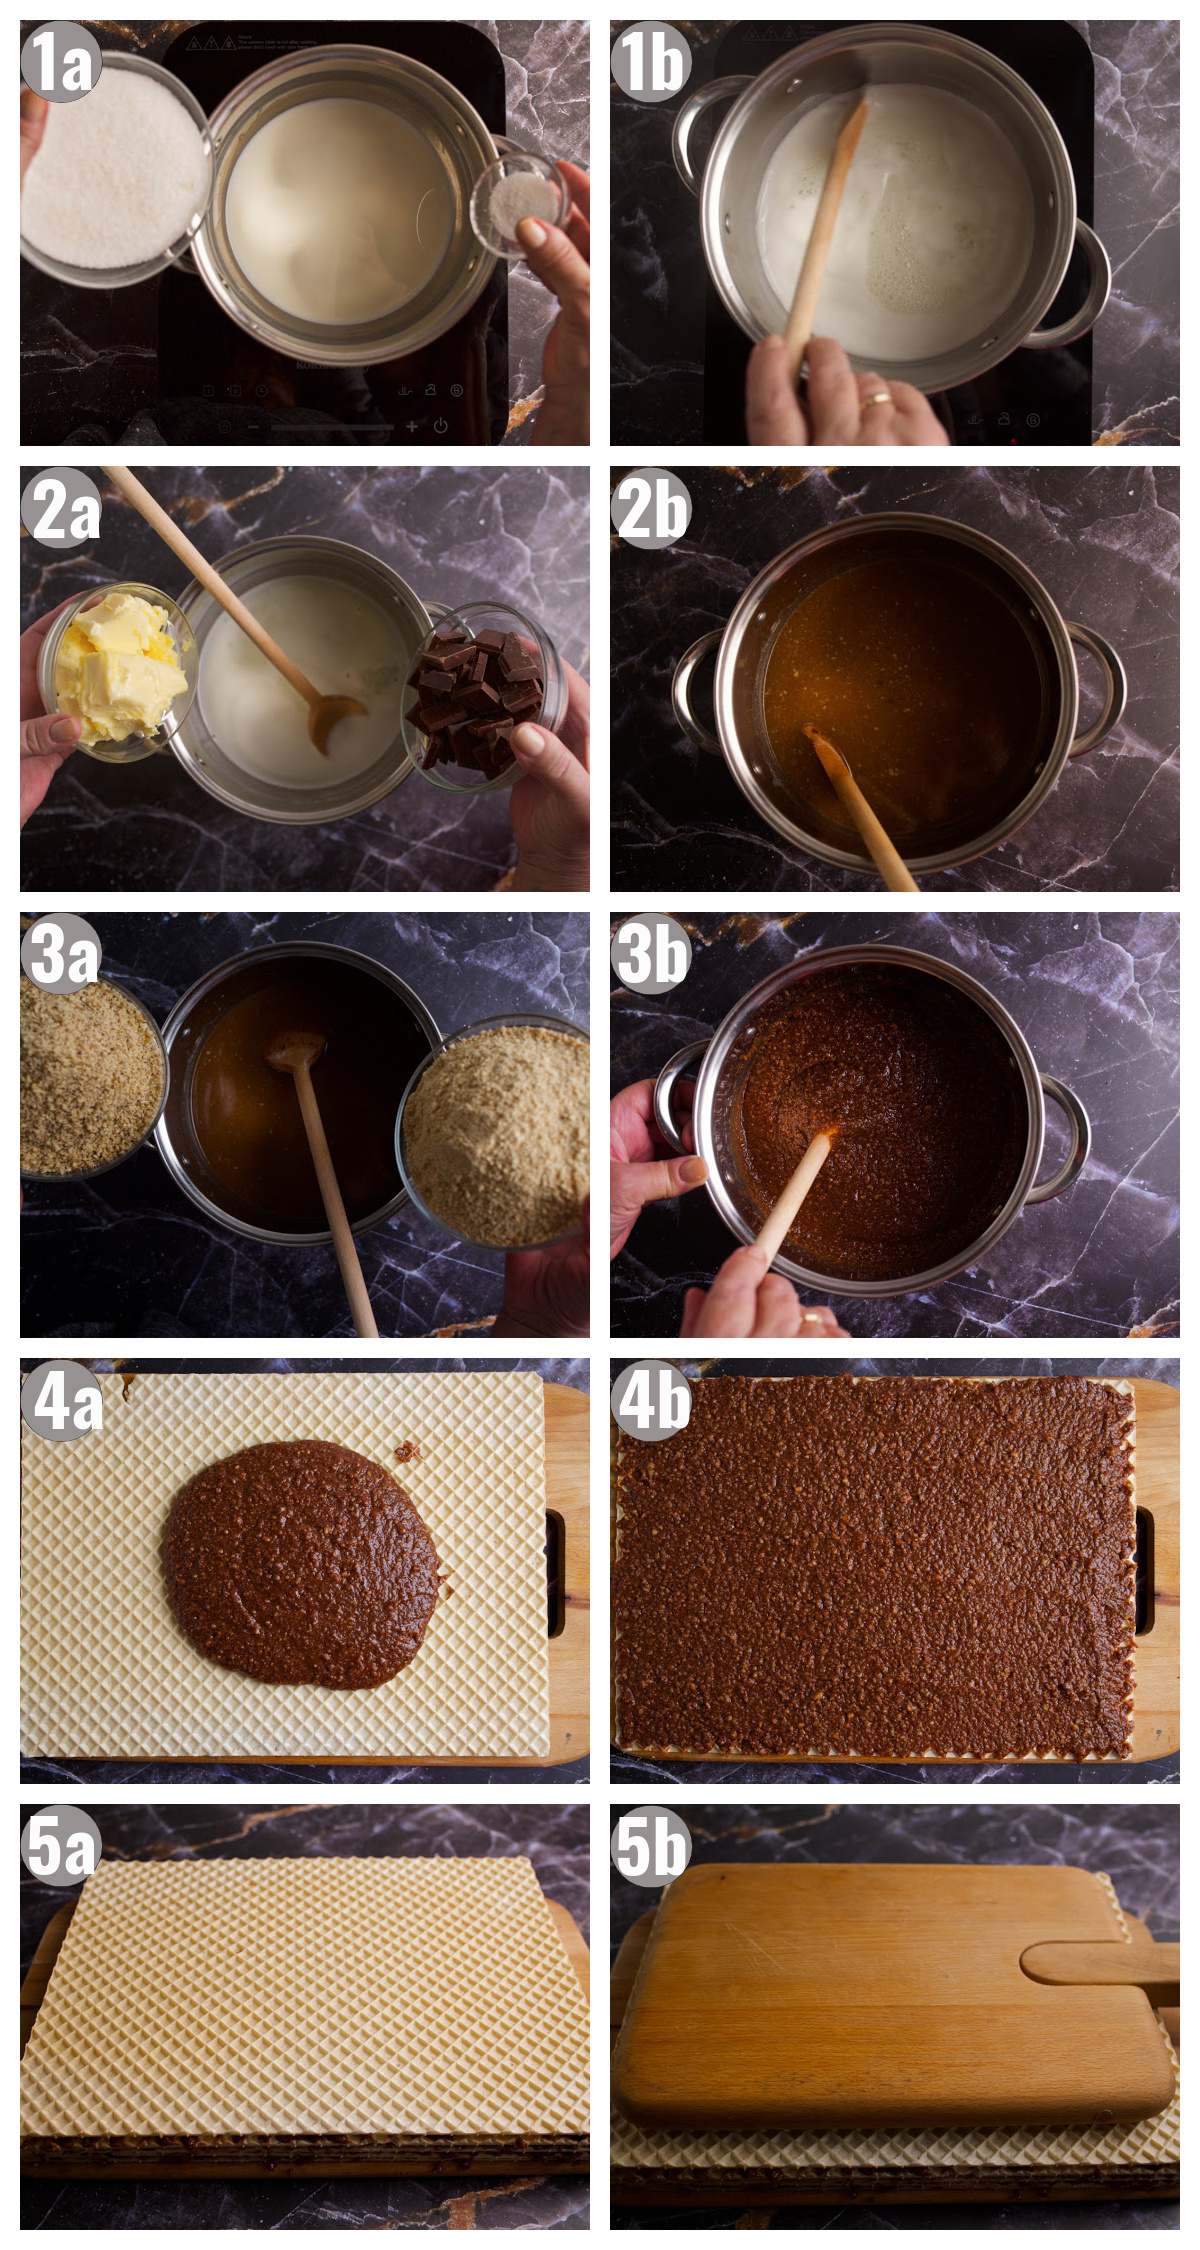 Steps for waffle cake 1-5.